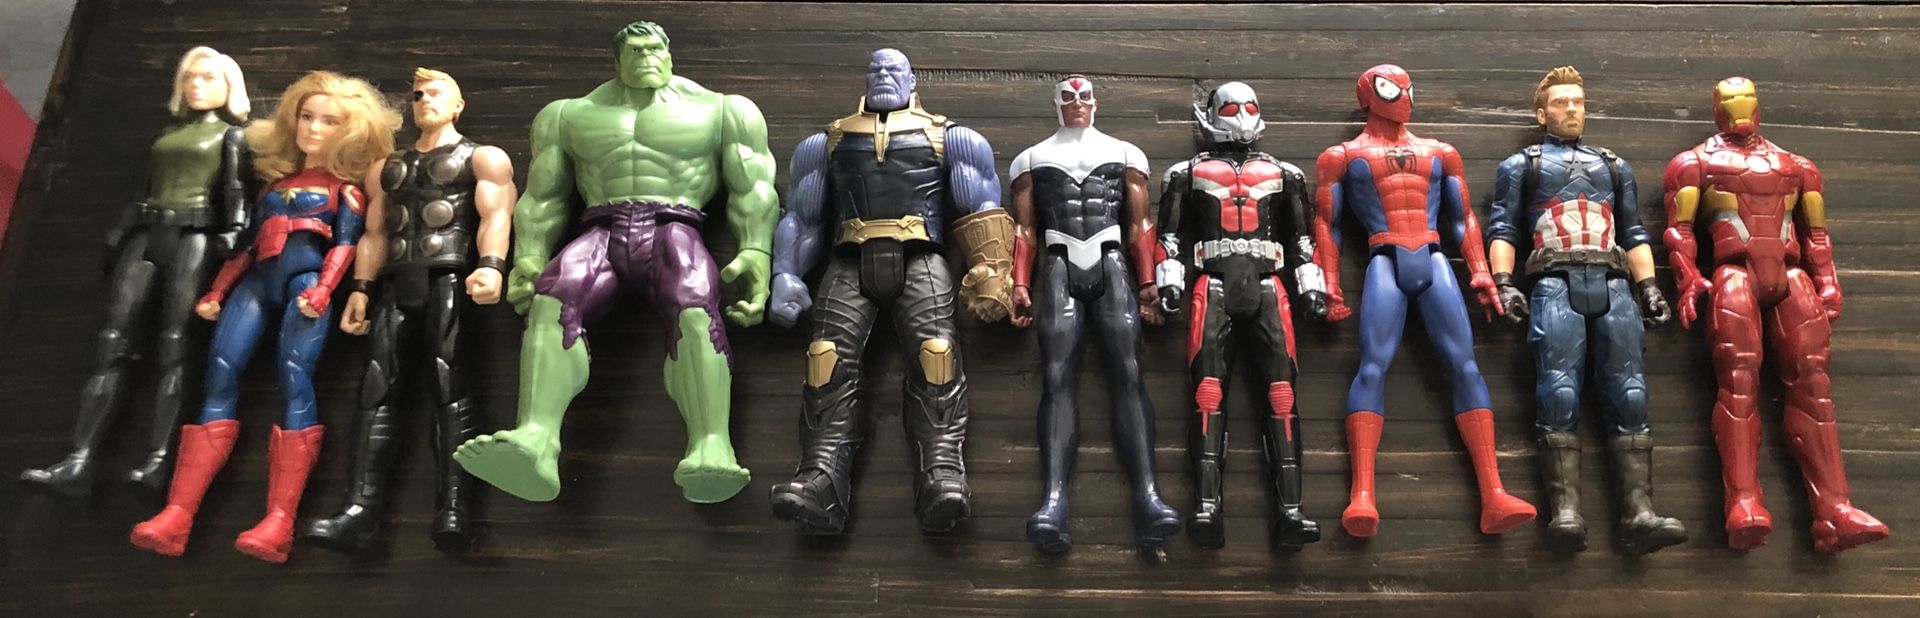 $55 Marvel avengers lot 10 figures like new condition